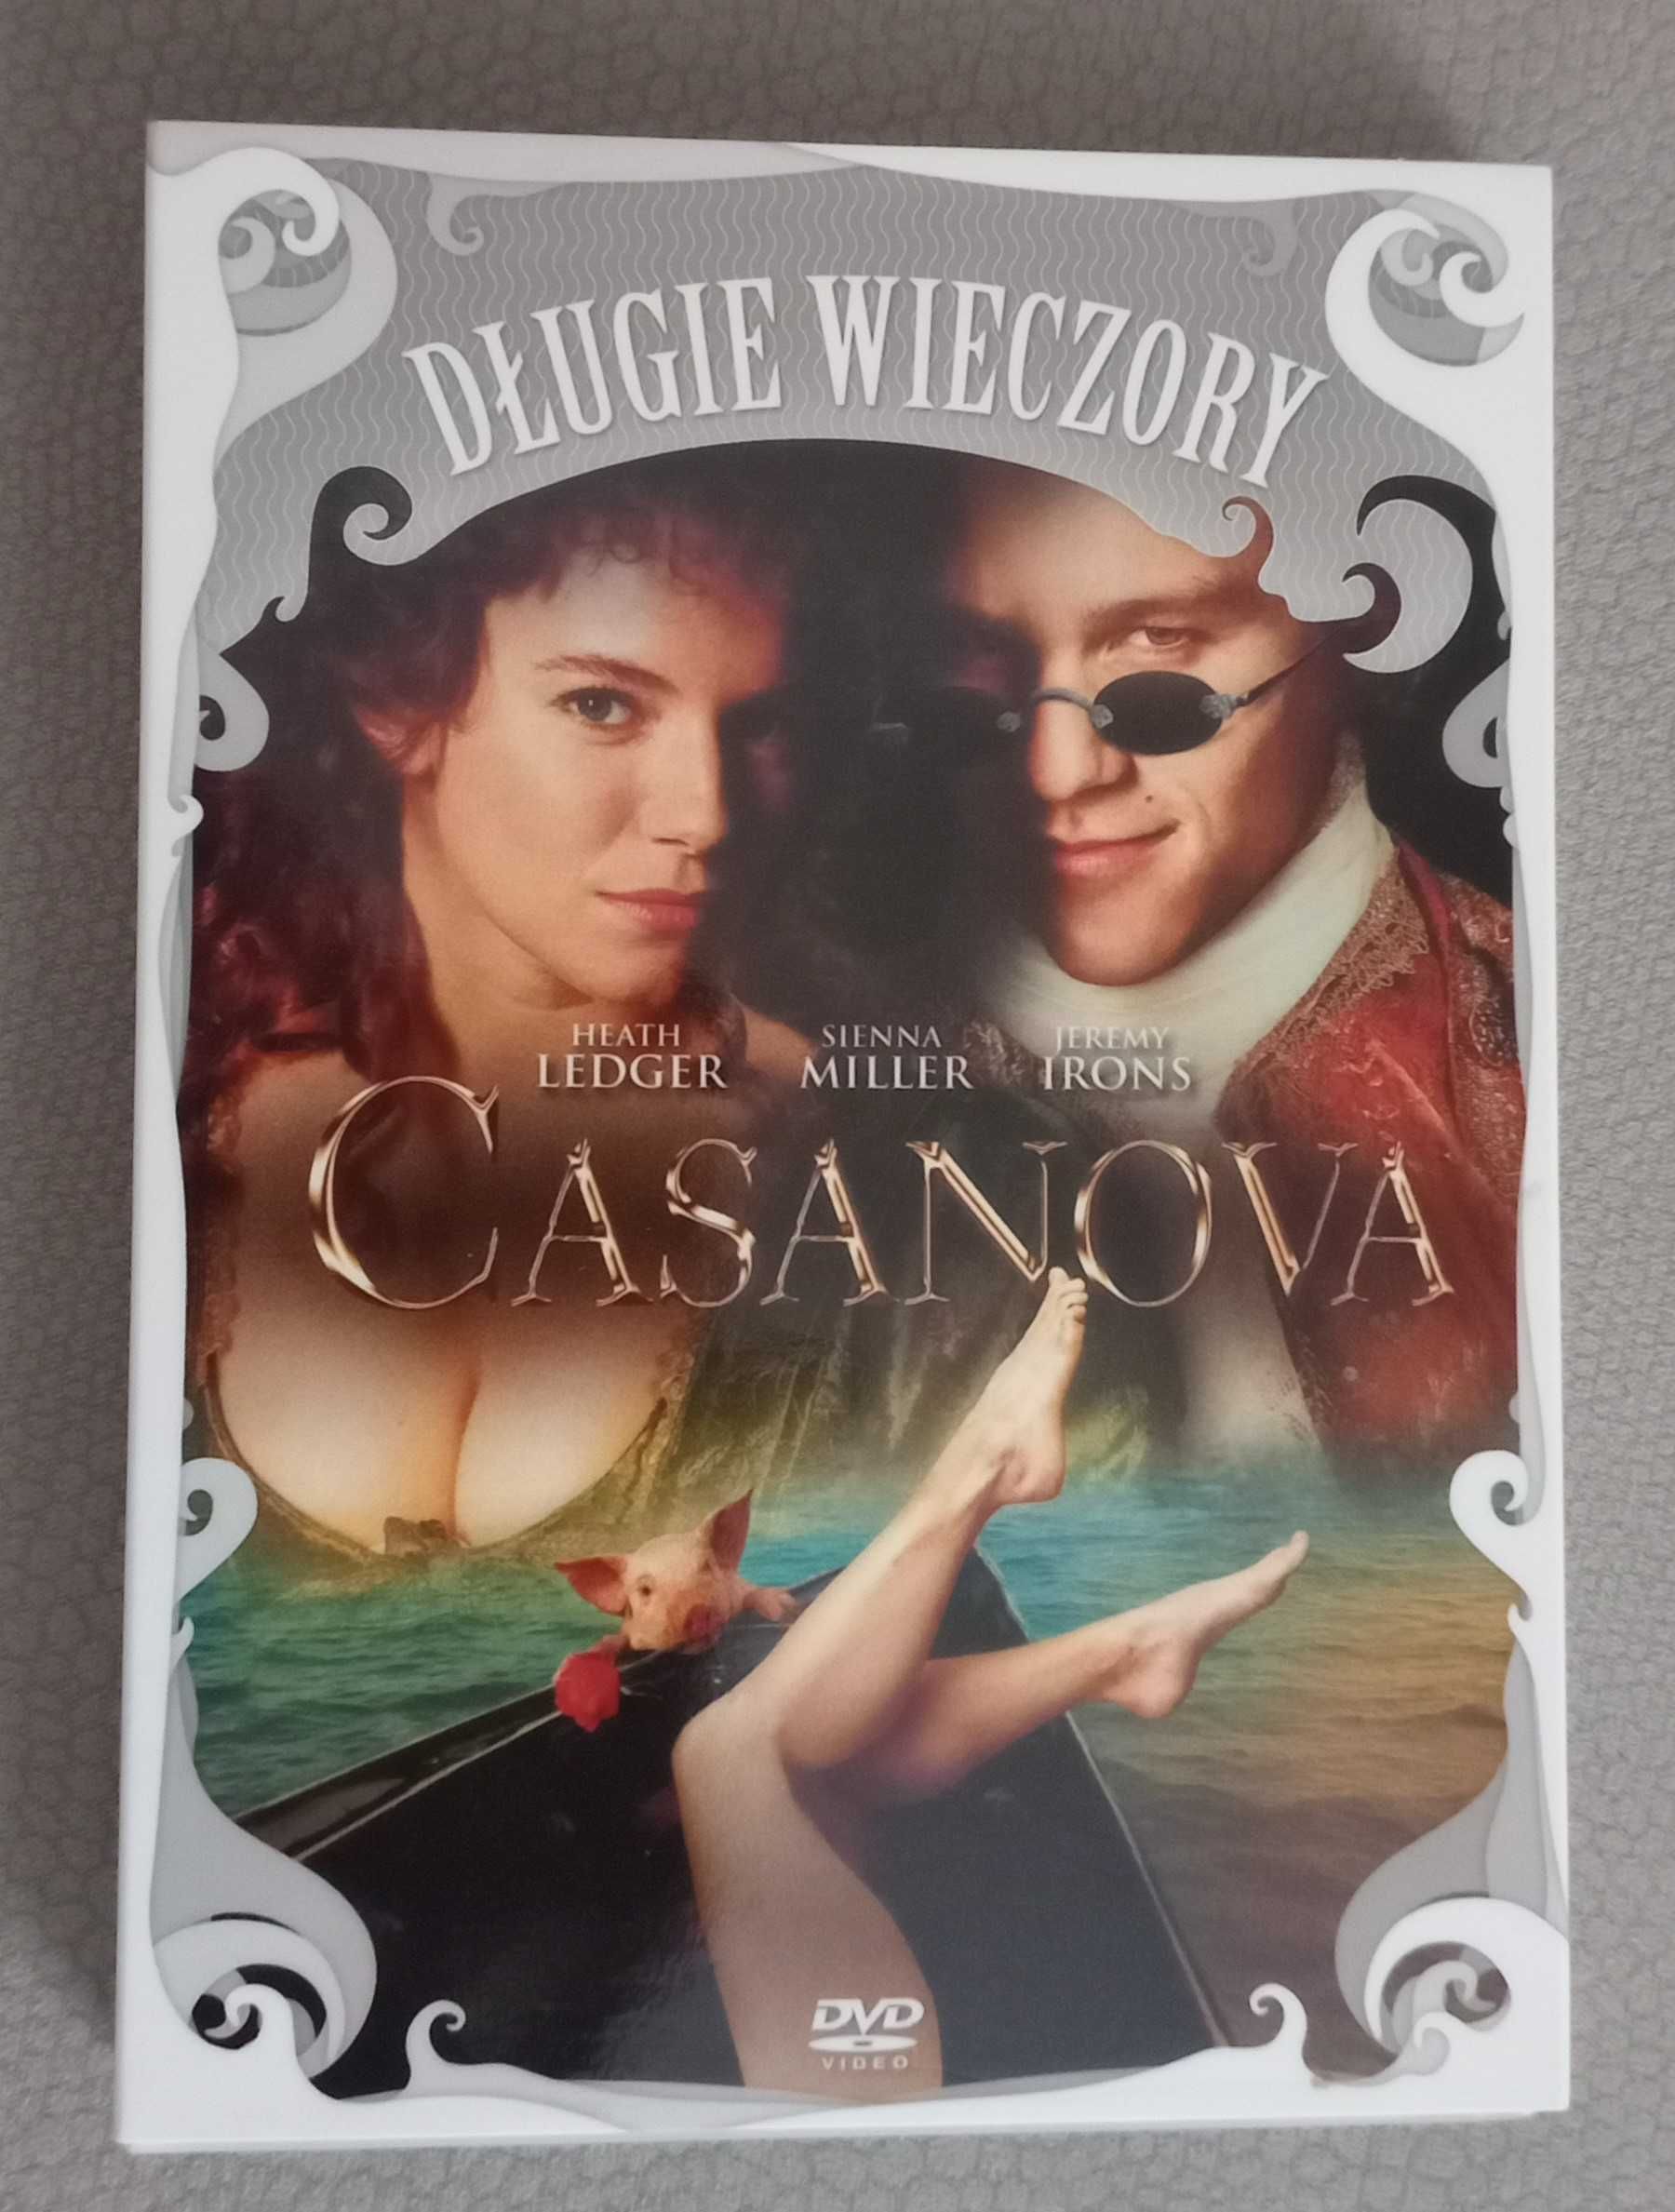 "Casanova" - film DVD + Dodatki